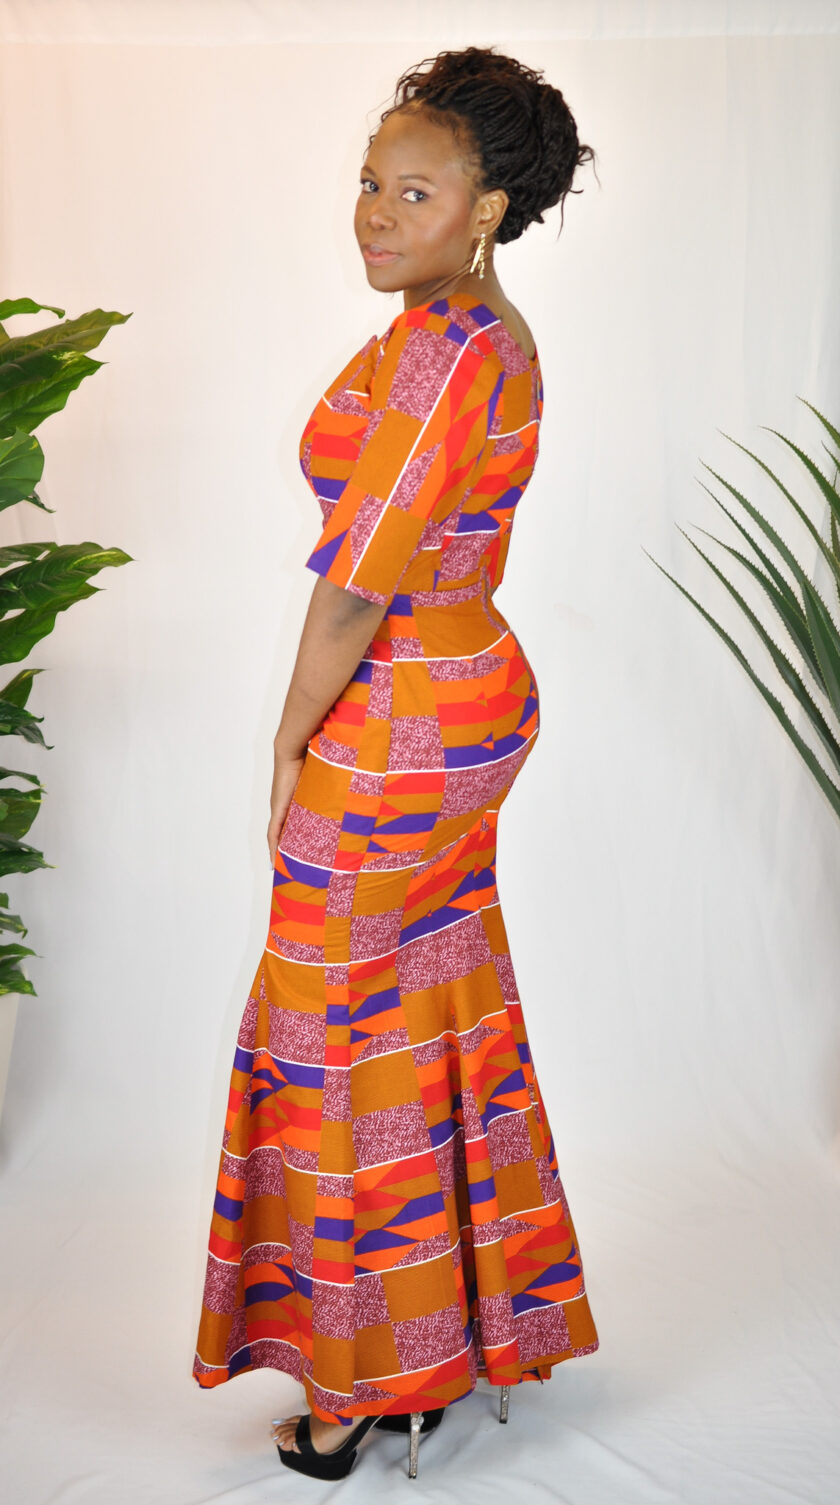 Teefah Colourful Kente African Silhouette Dress